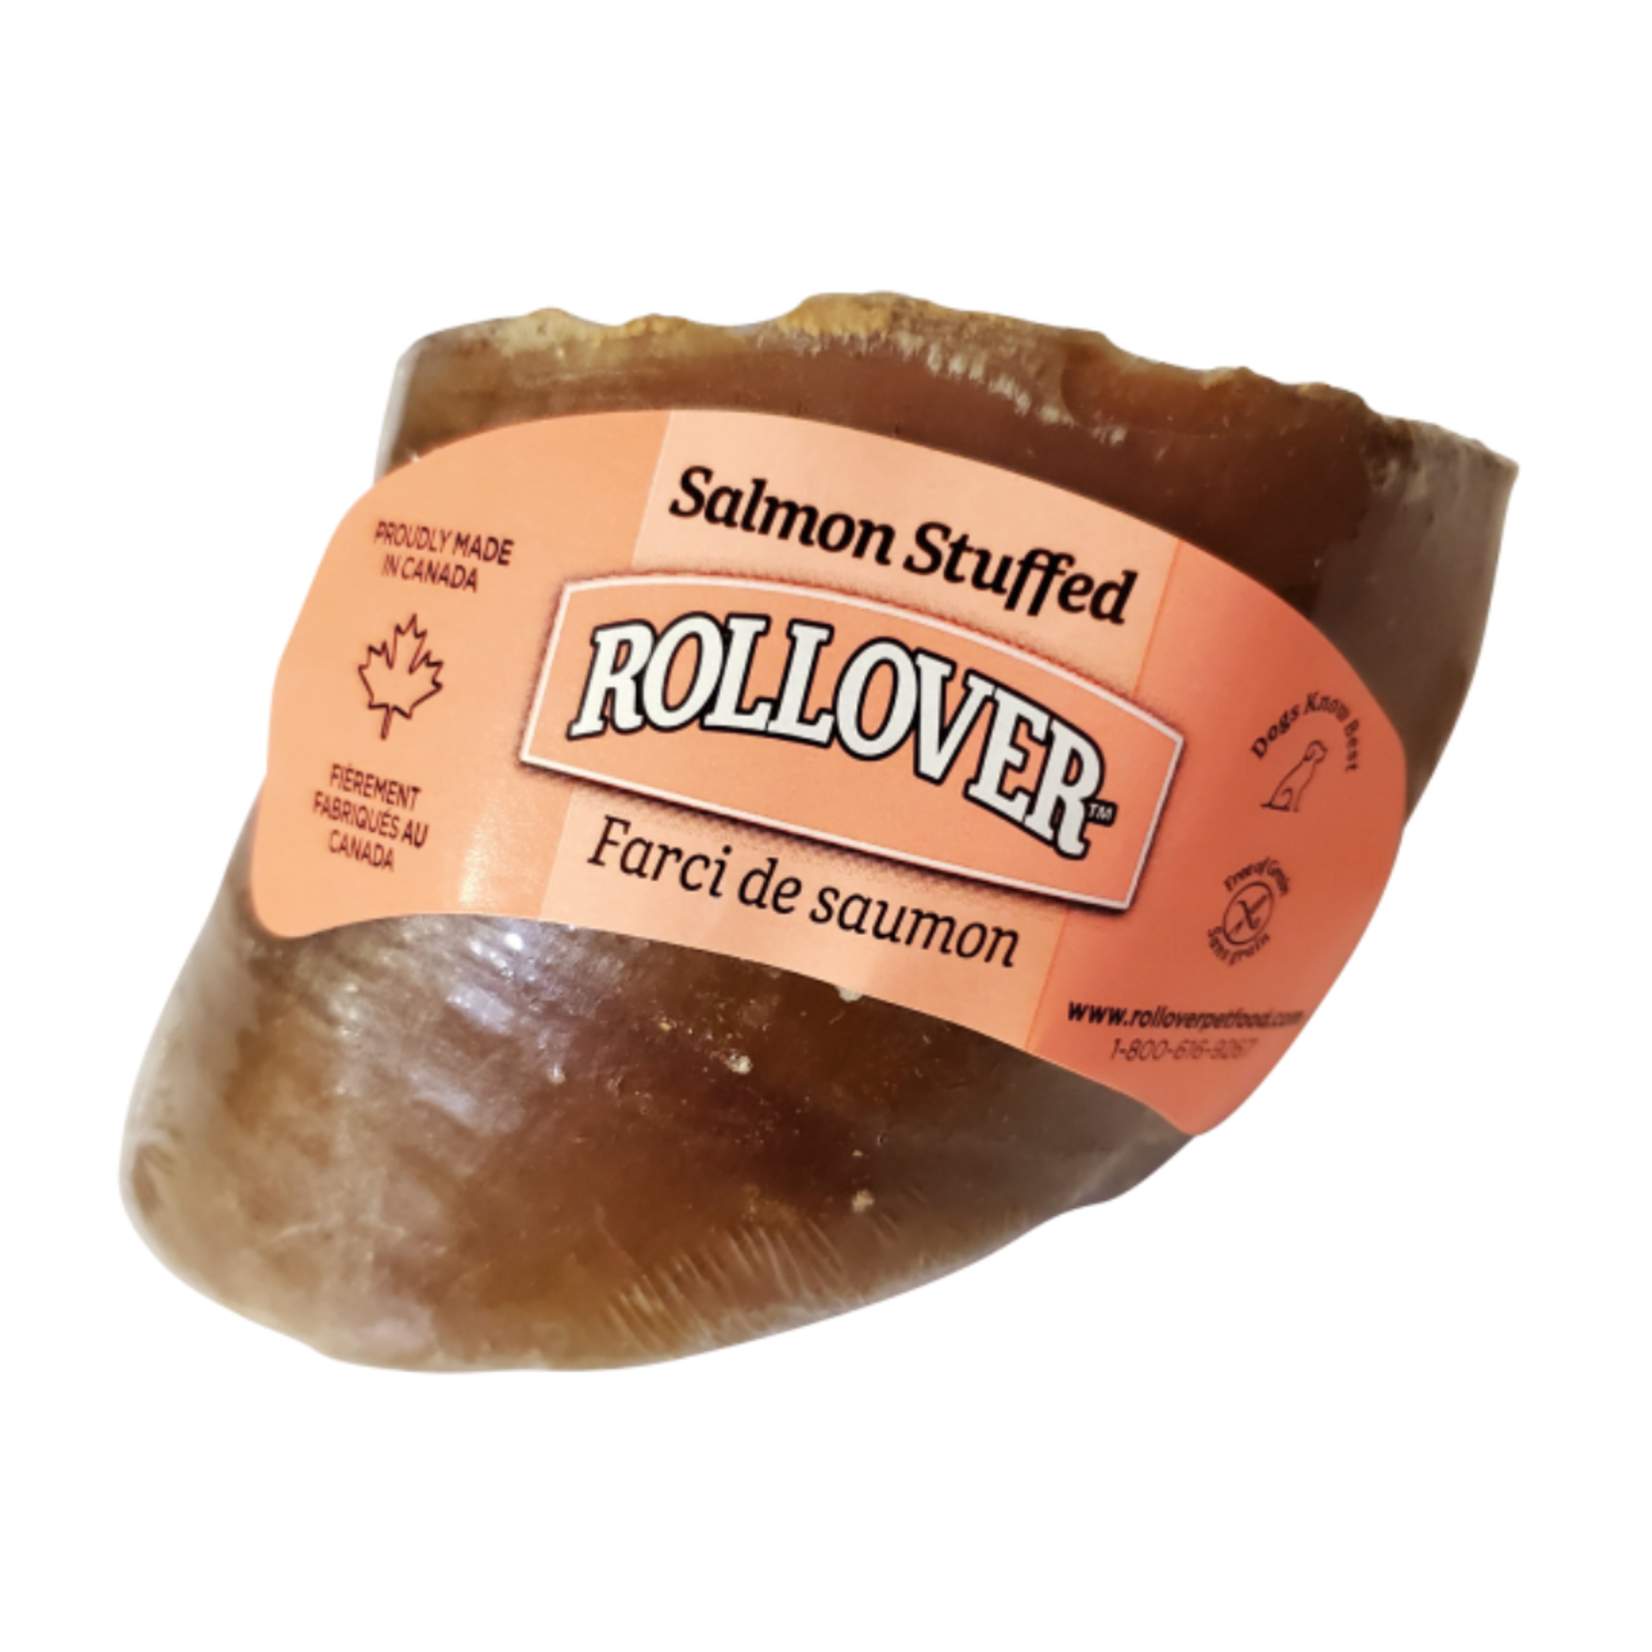 Rollover Rollover Grain Free Salmon Stuffed Hoof Large